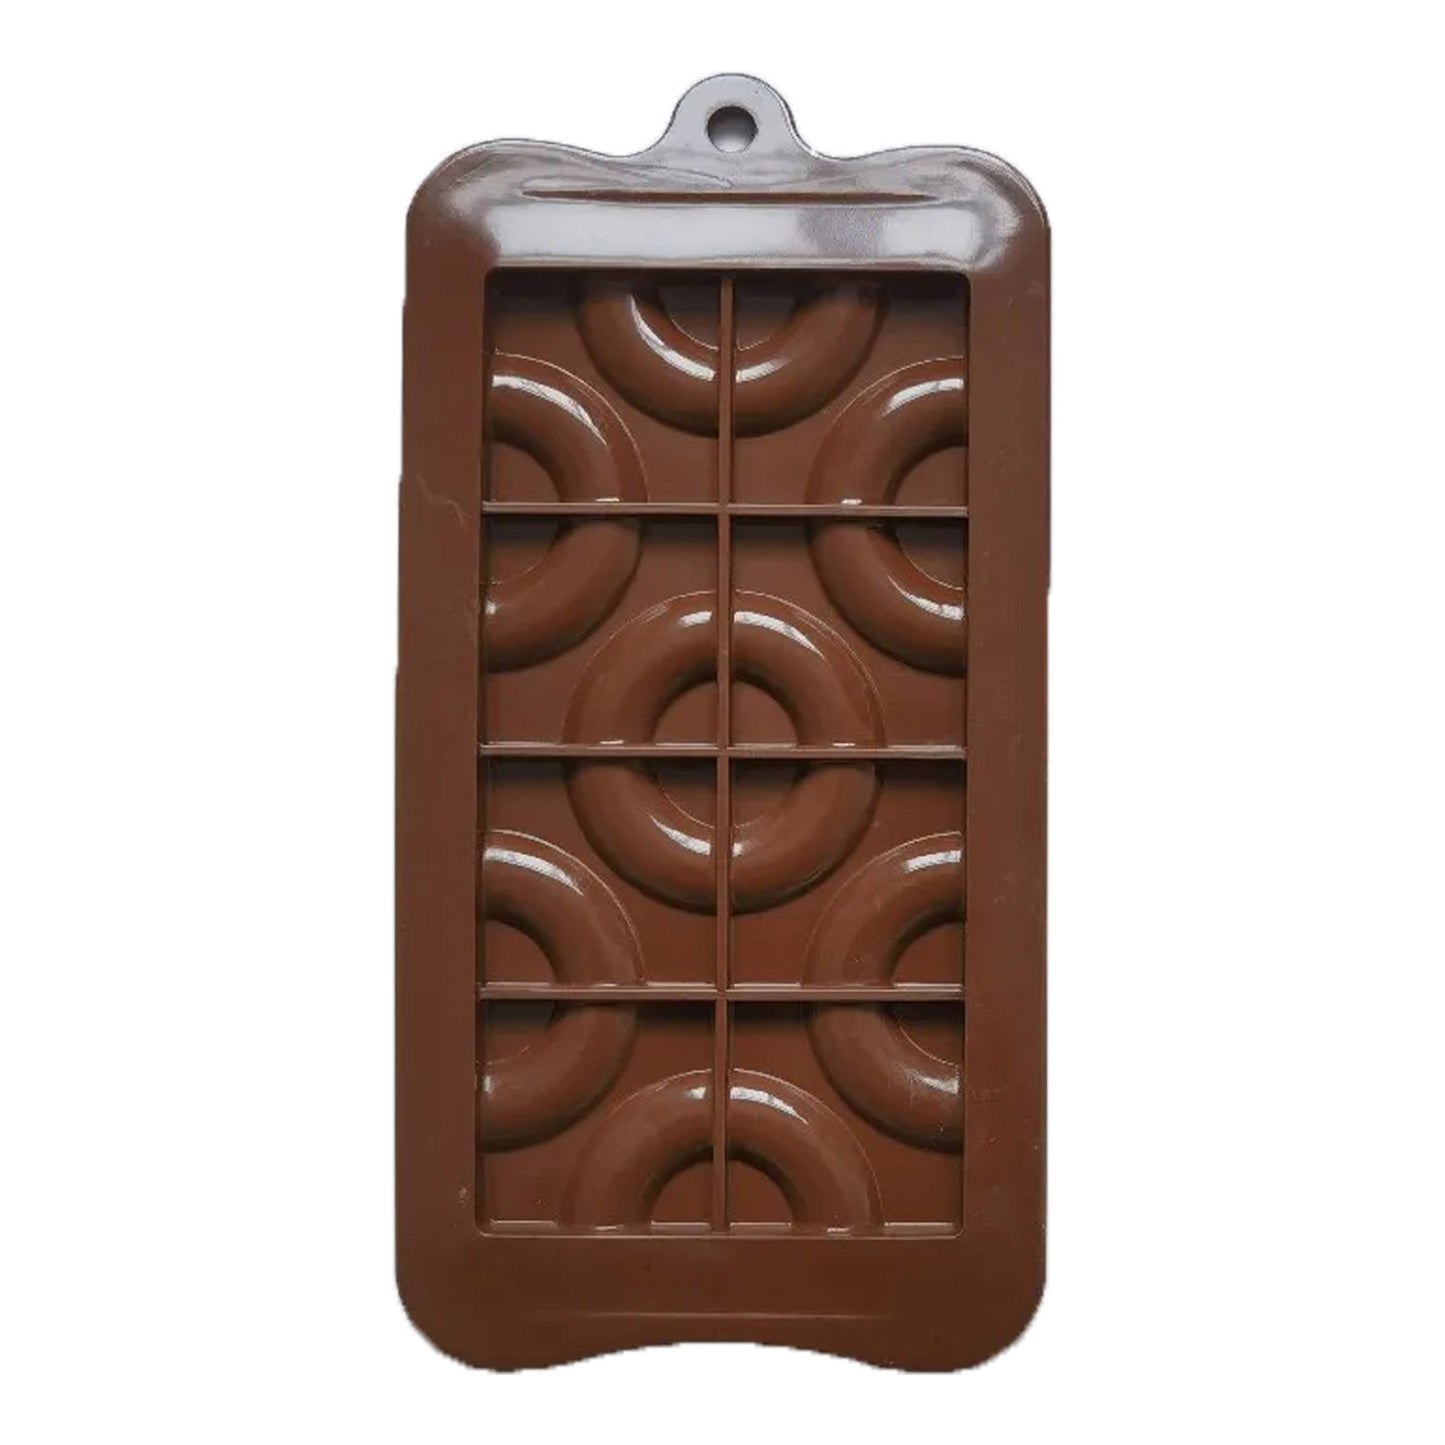 Donuts Design Chocolate Bar Silicone Mold